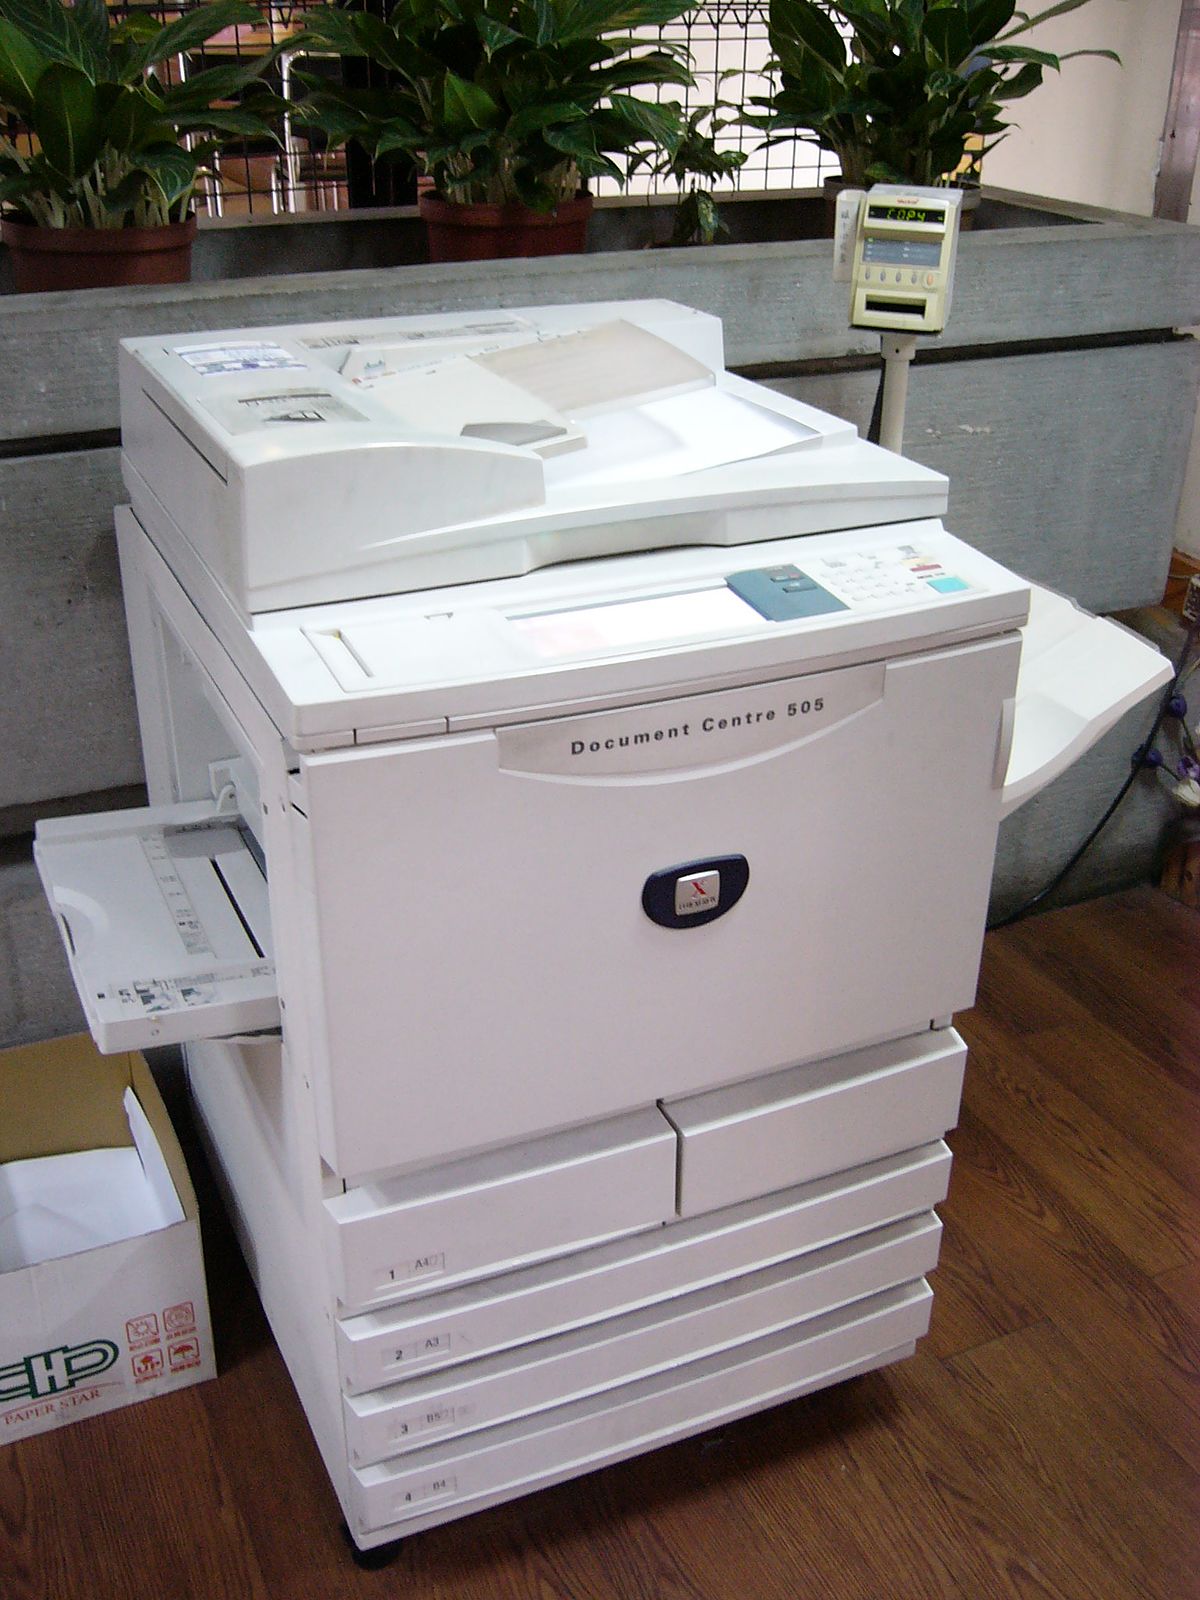 Photocopier - Wikipedia